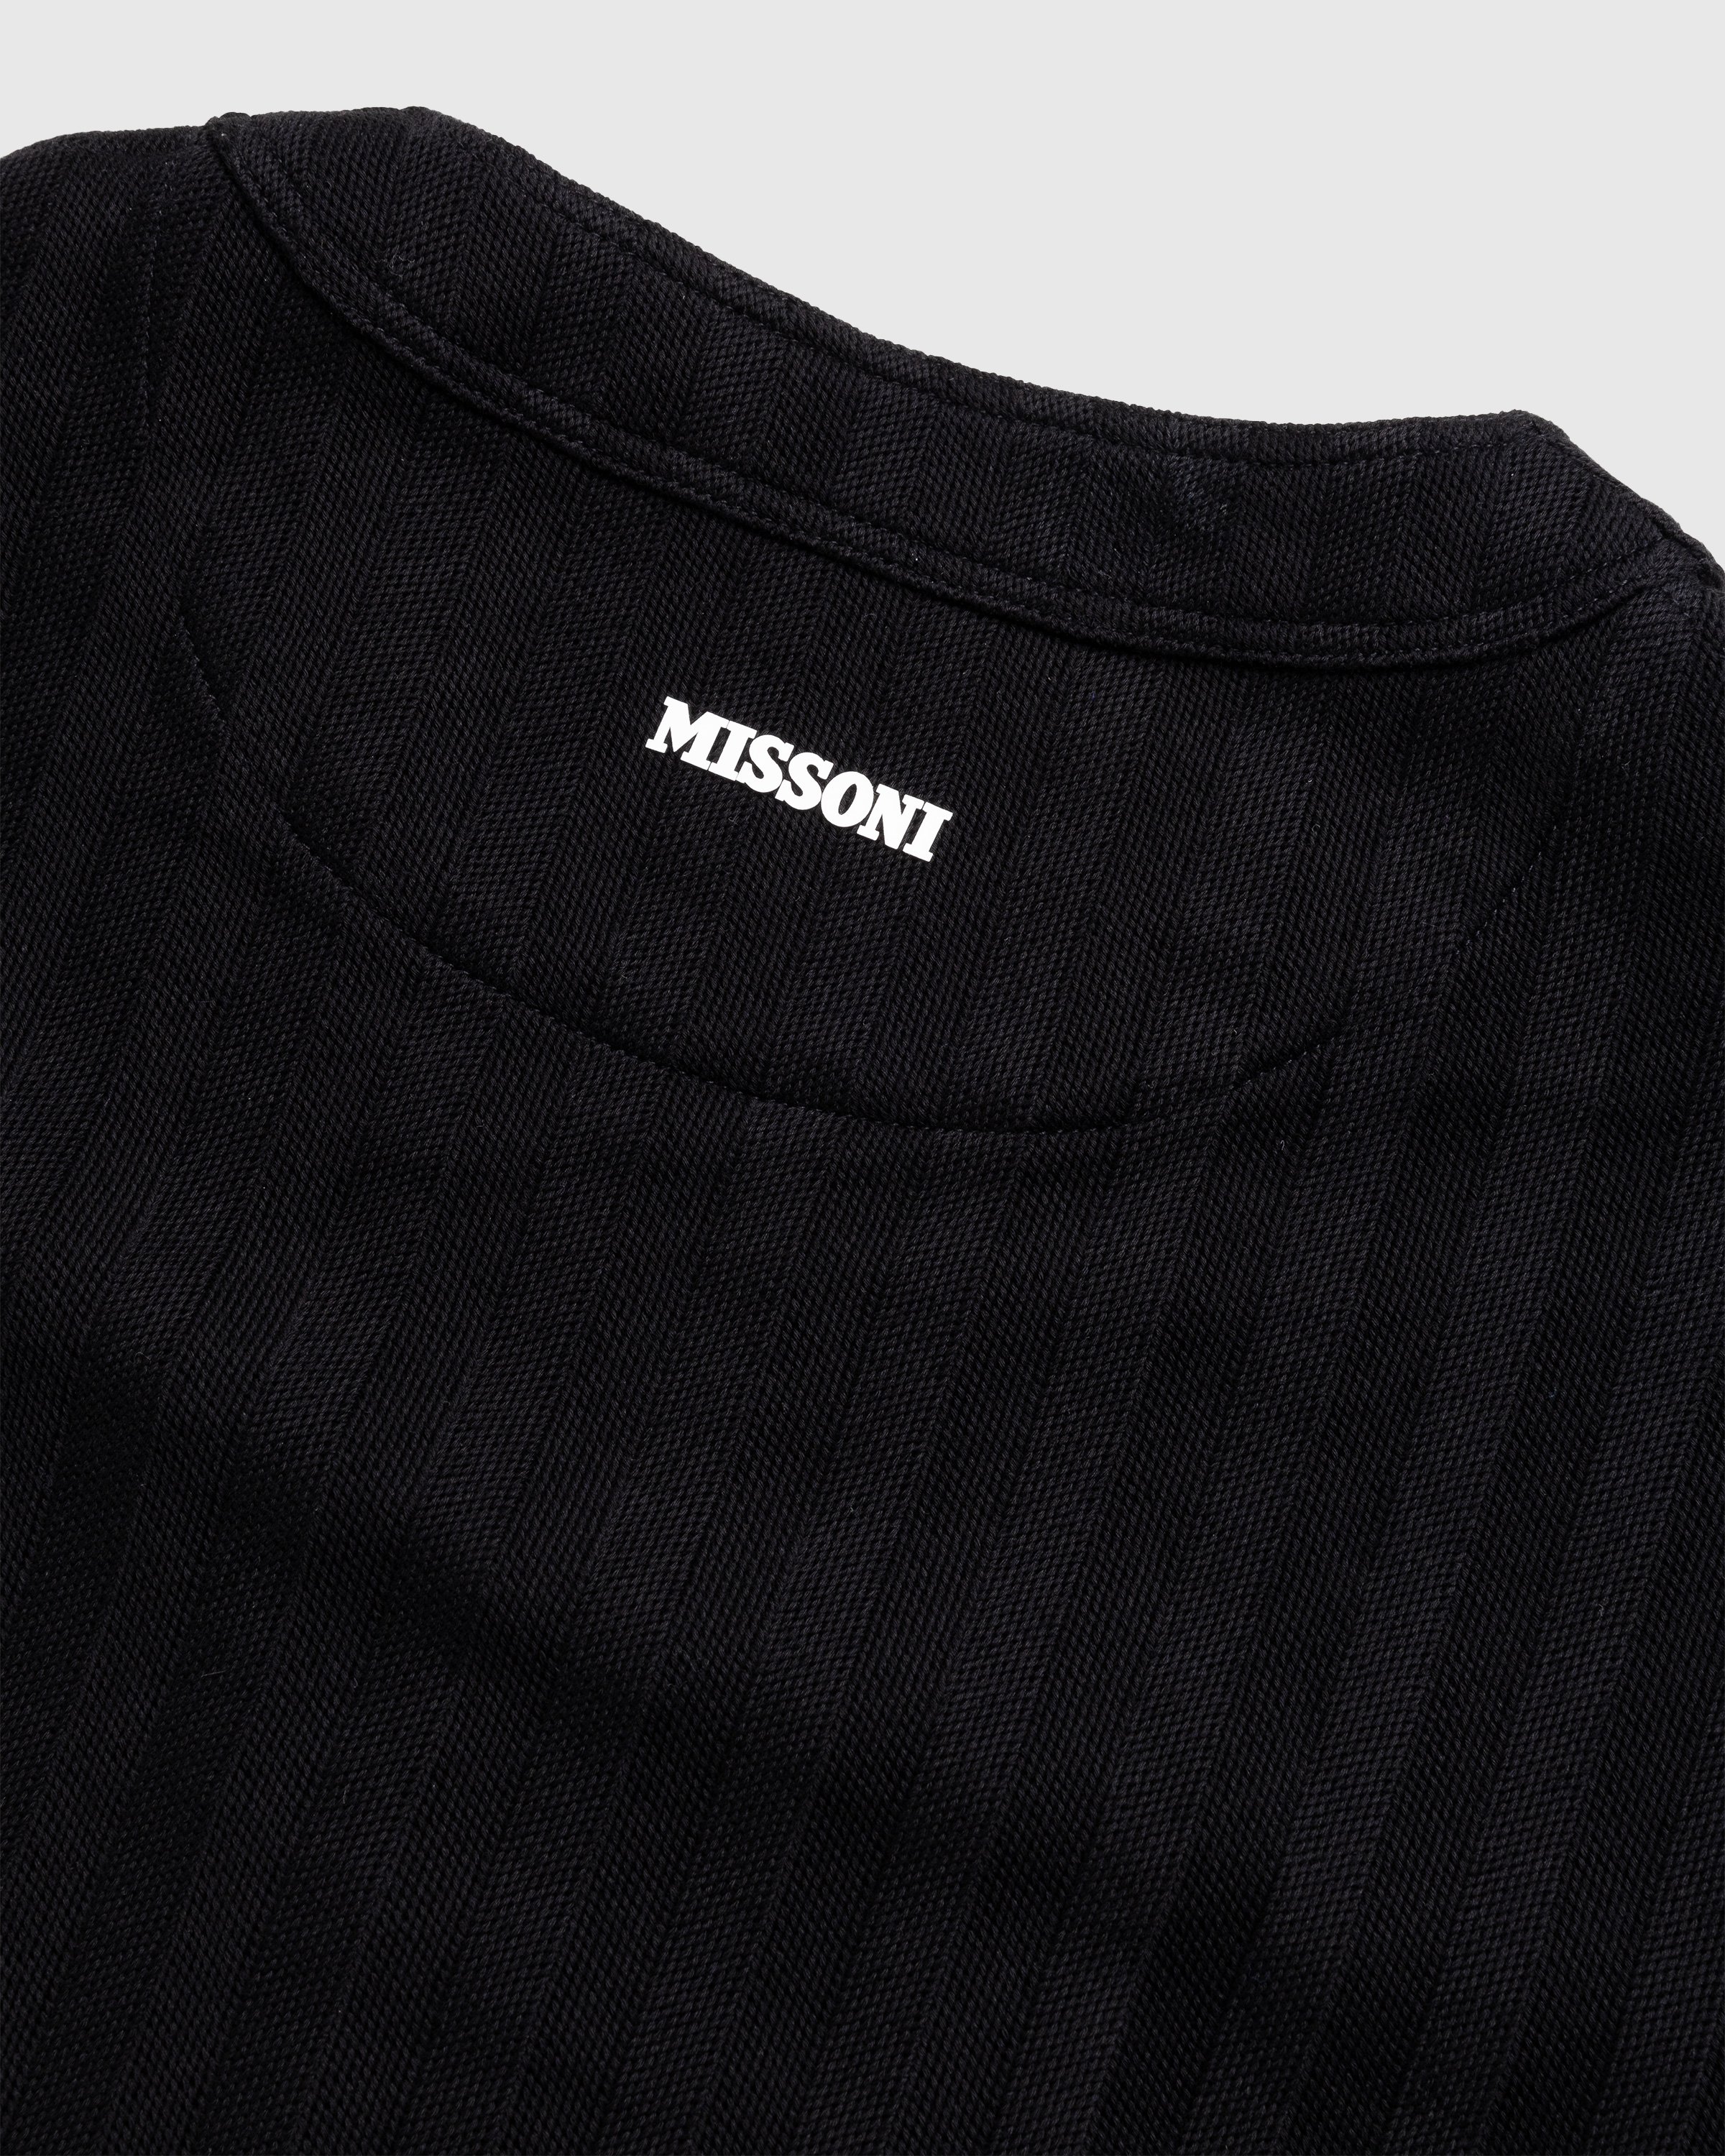 Missoni - Knitted T-Shirt Black - Clothing - Black - Image 5